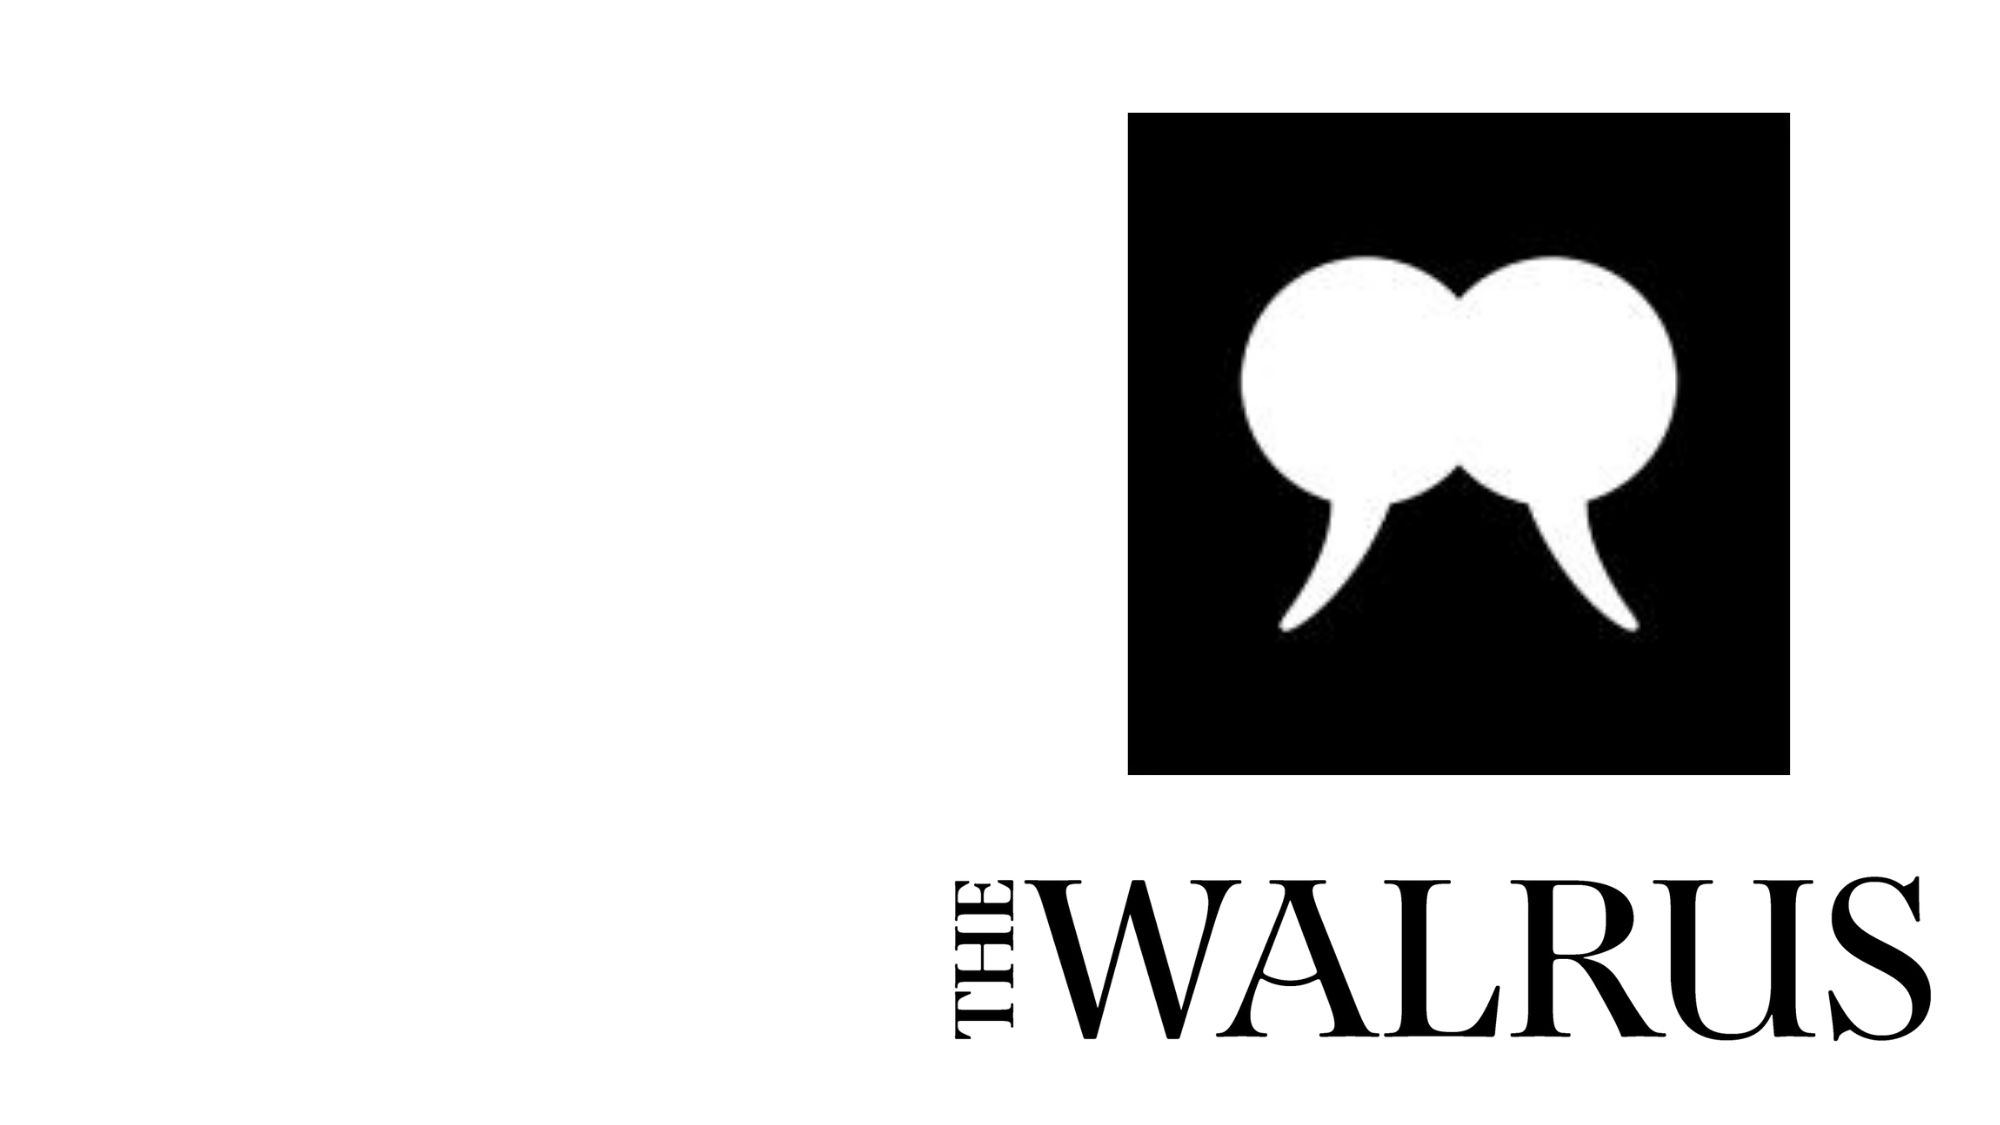 The Walrus logo: black chat-box cutout on white background.